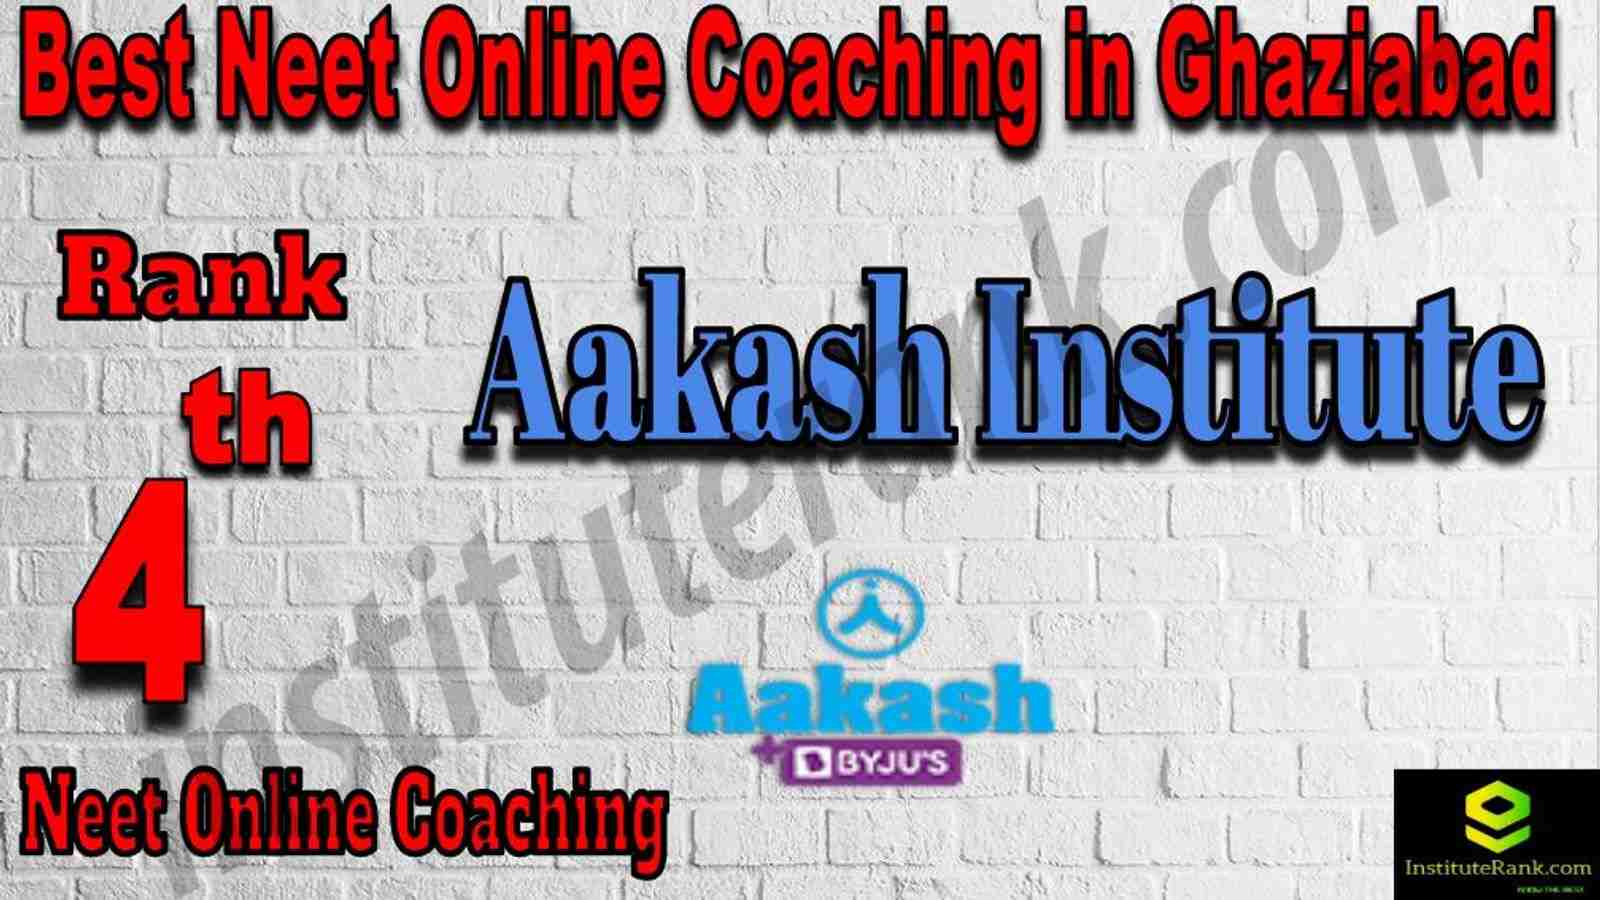 4th Best Neet Online Coaching in Ghaziabad